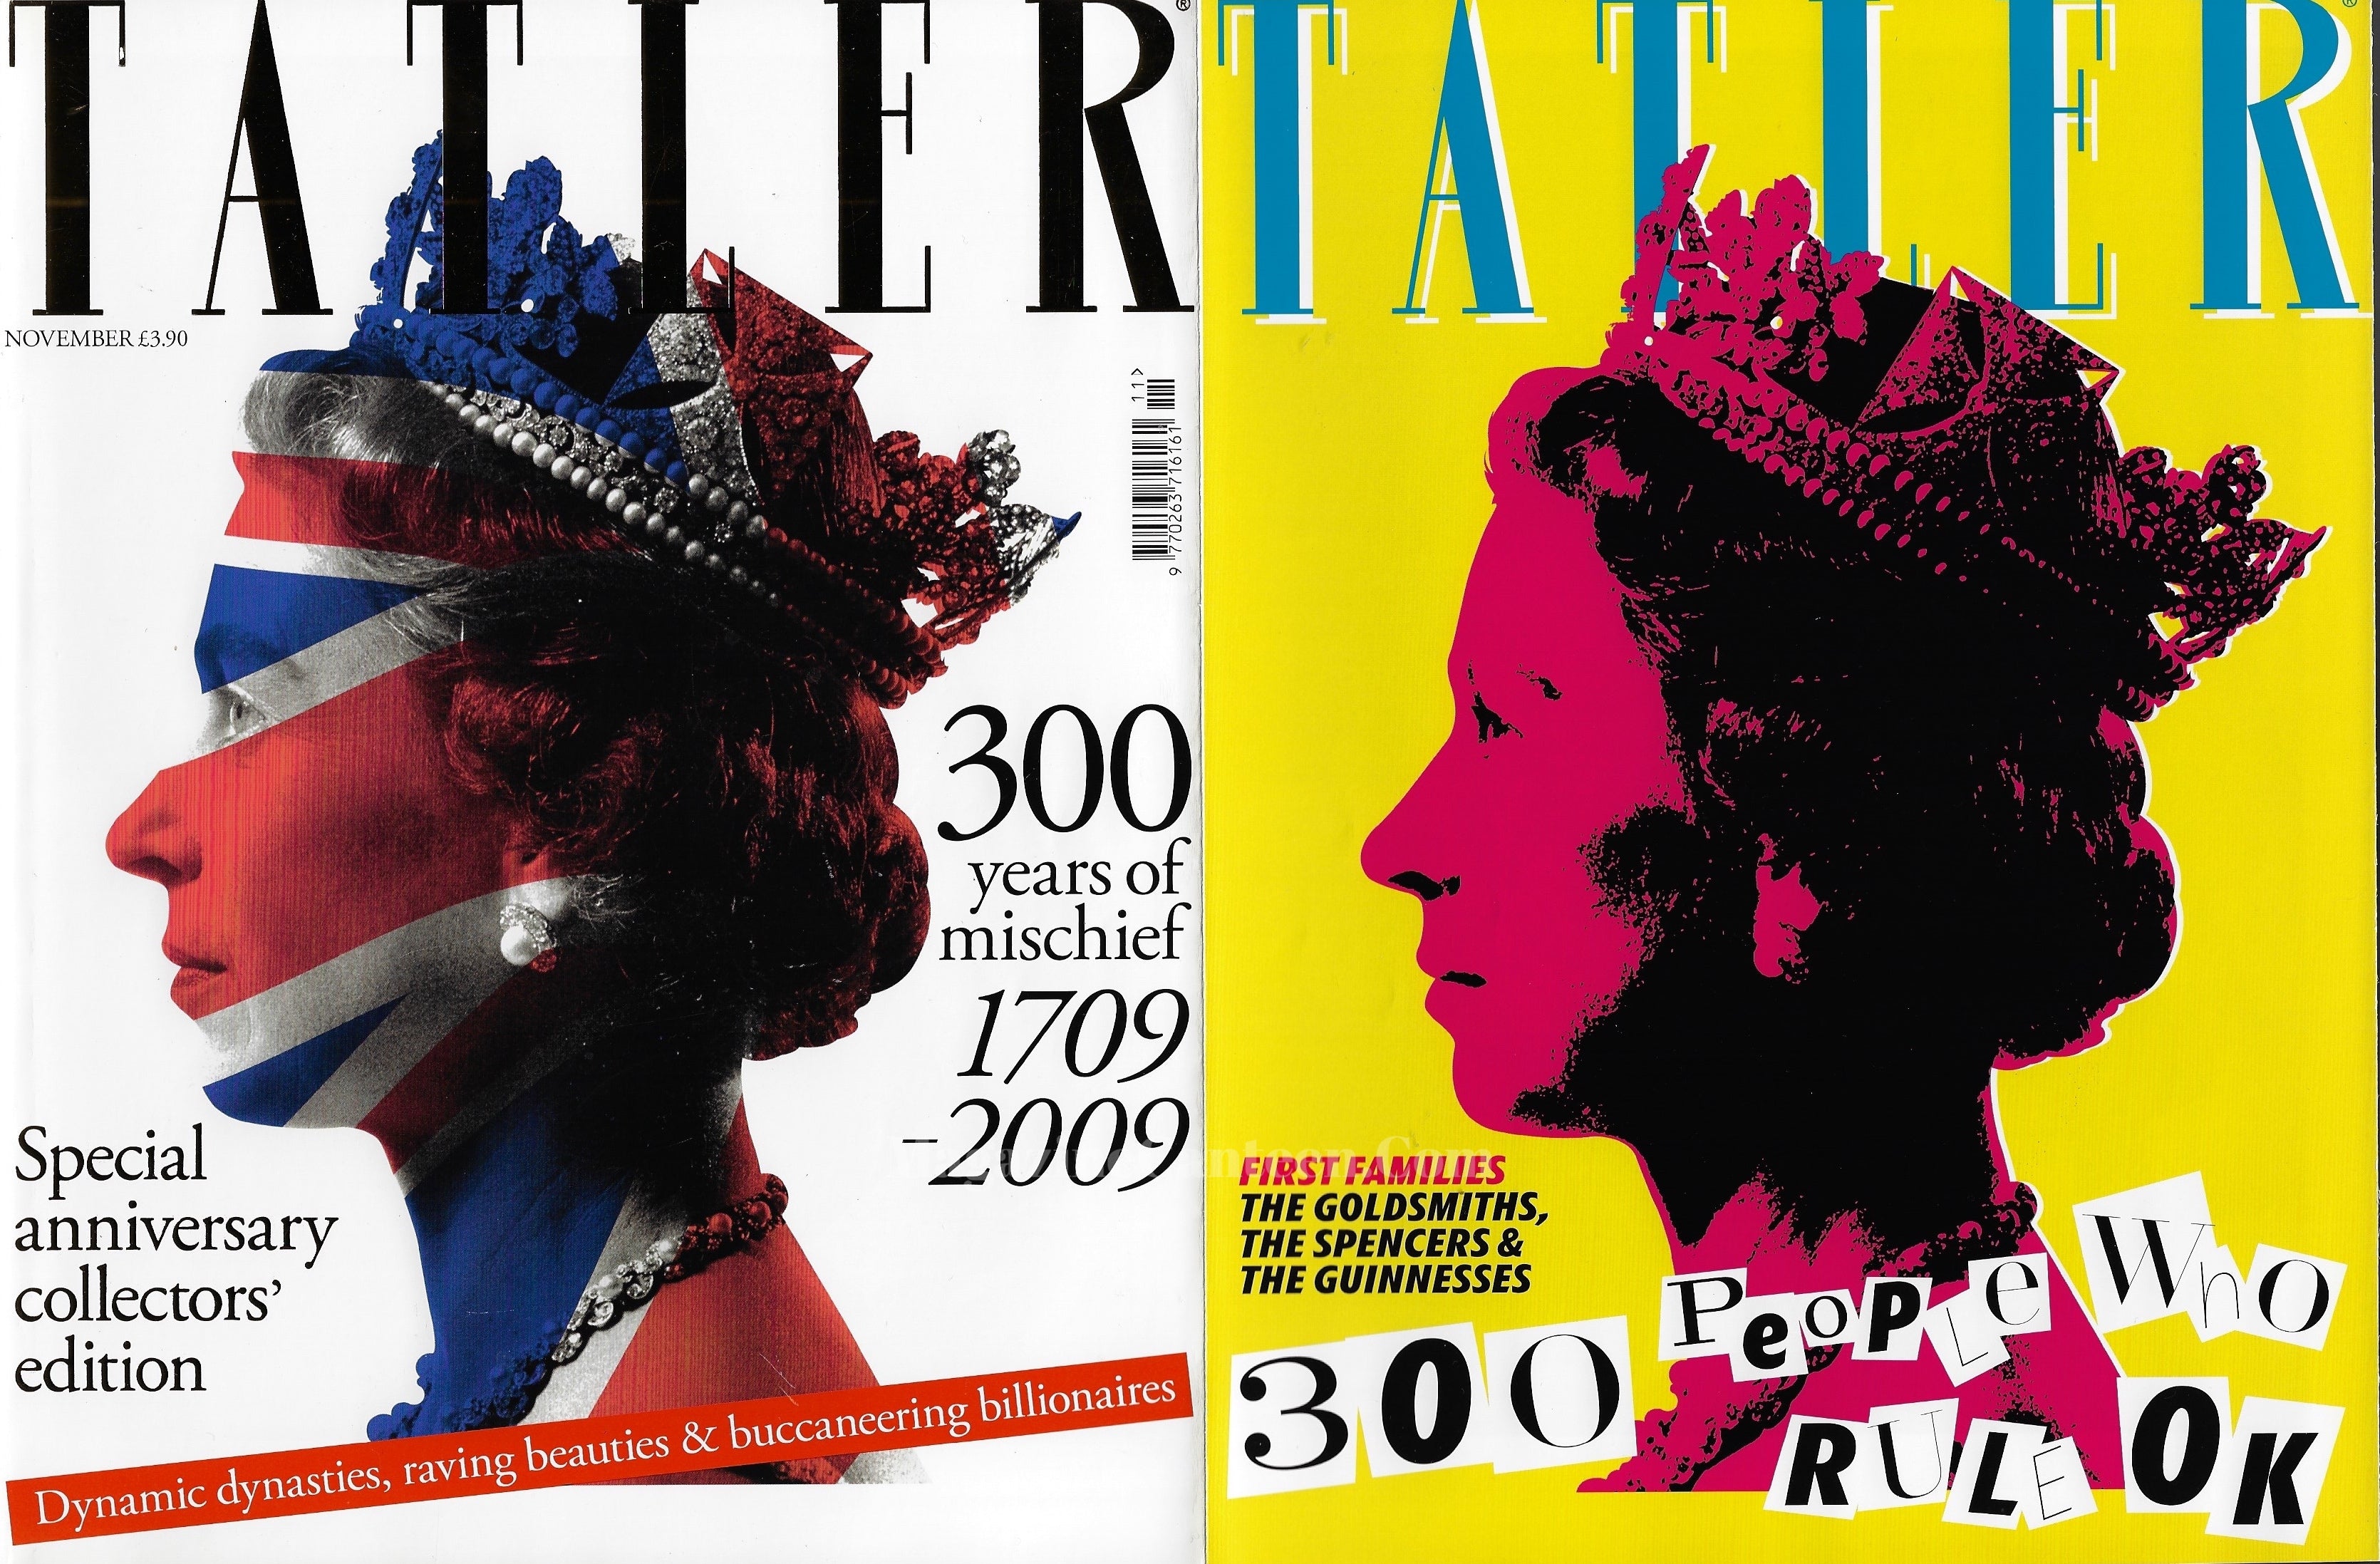 Tatler Magazine - The Queen Elizabeth